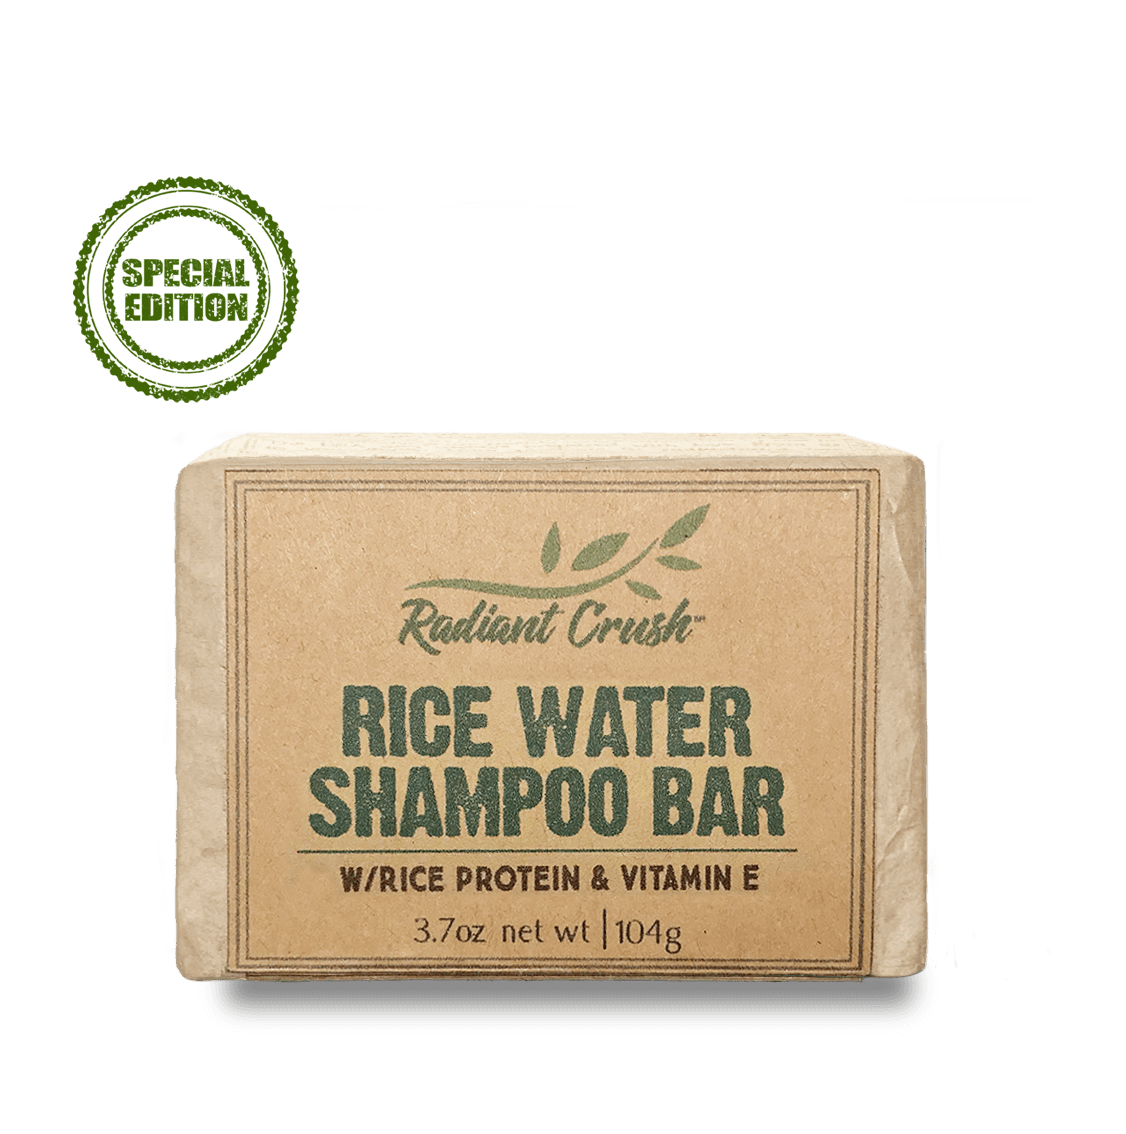 Rice Water Shampoo Bar - Radiant Crush